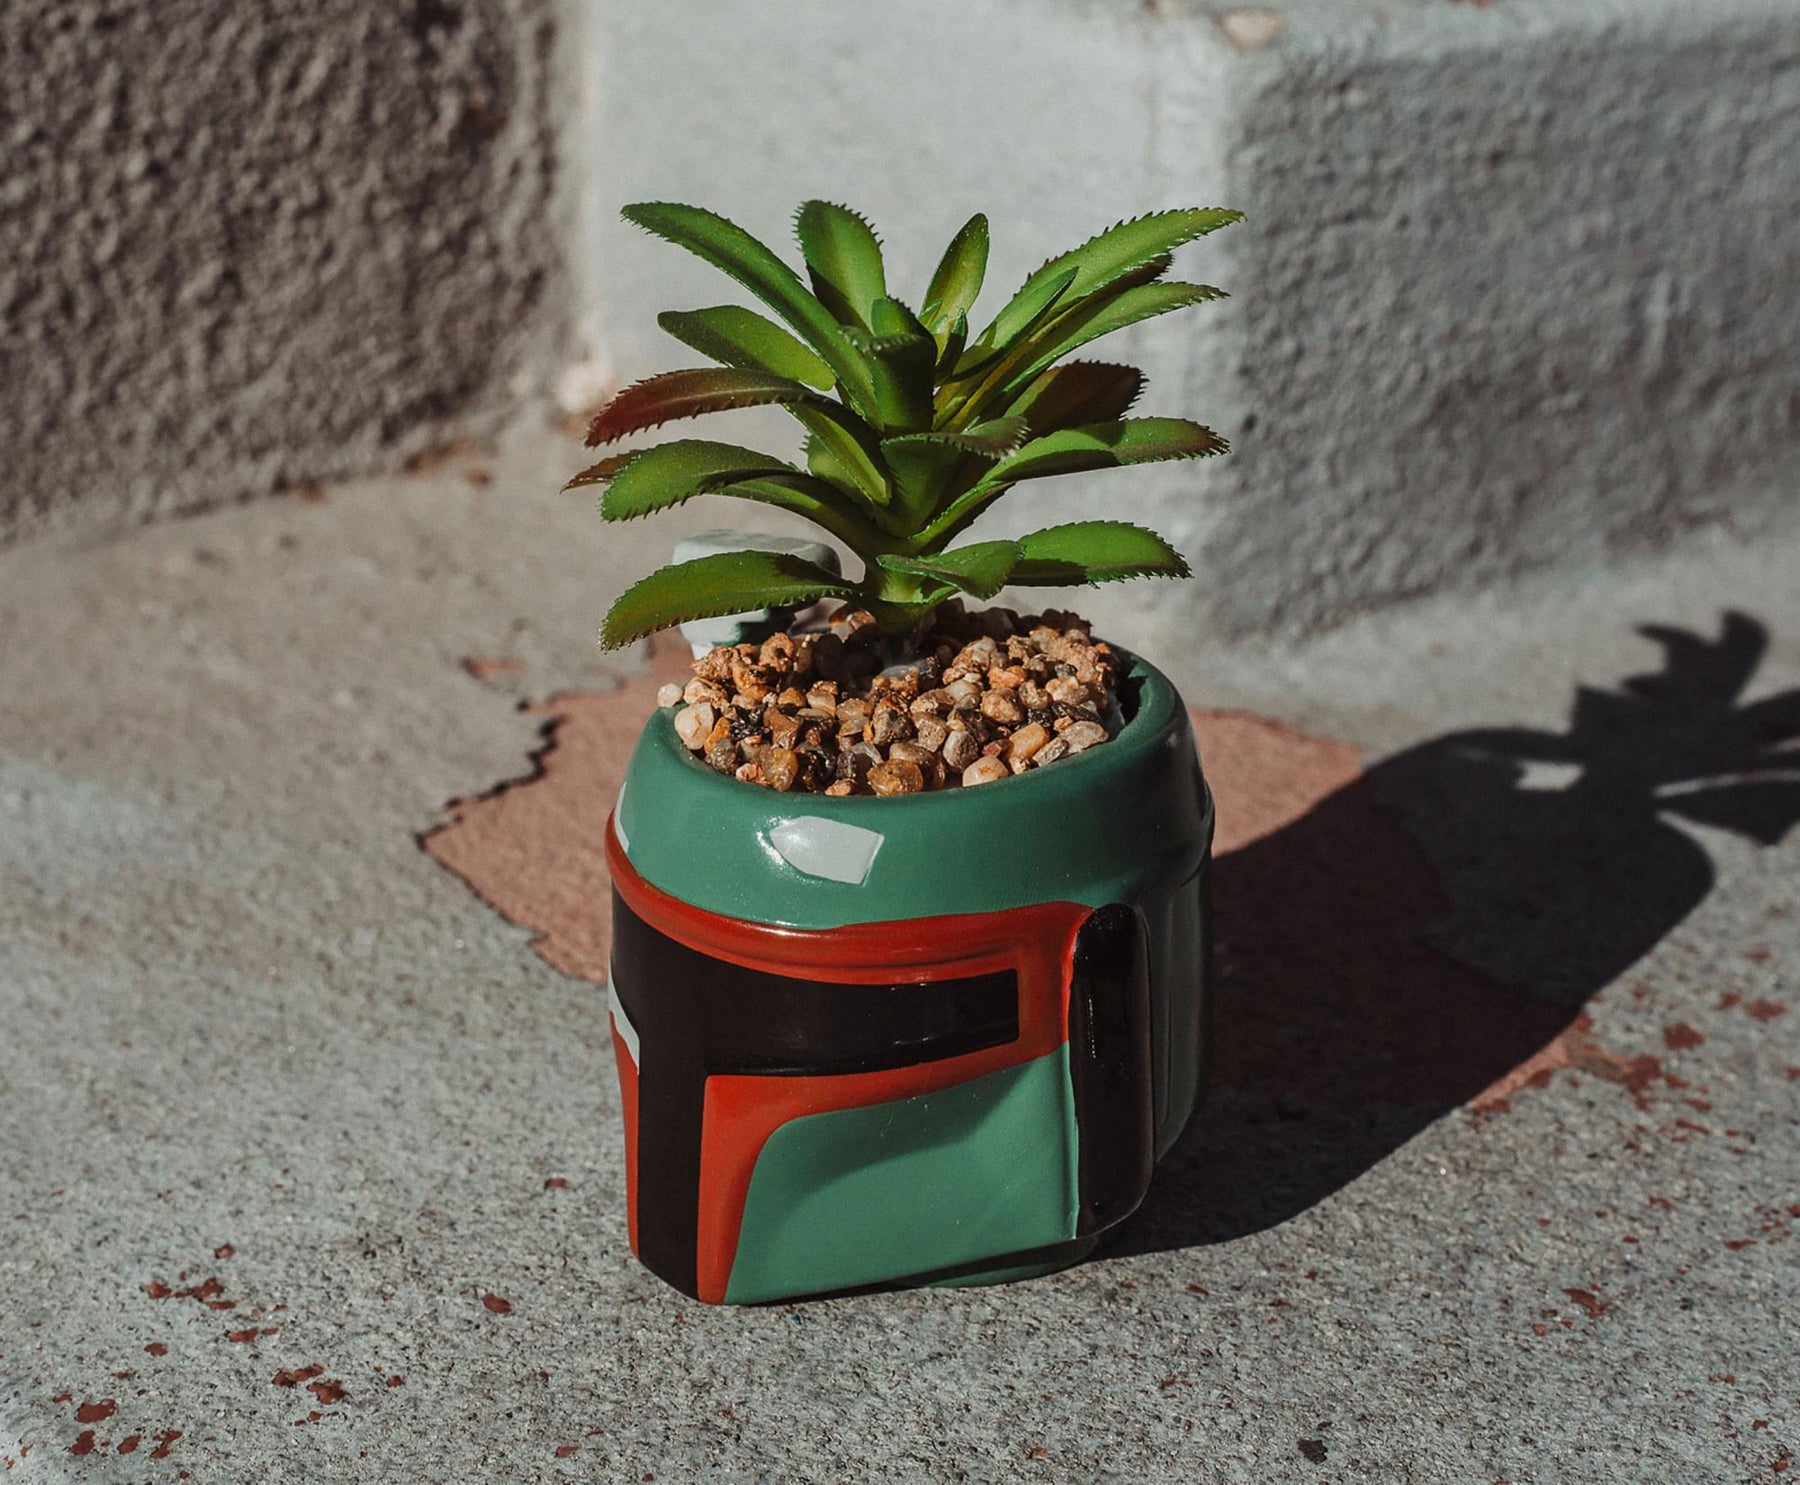 Star Wars Boba Fett Helmet 3-Inch Ceramic Mini Planter With Artificial Succulent